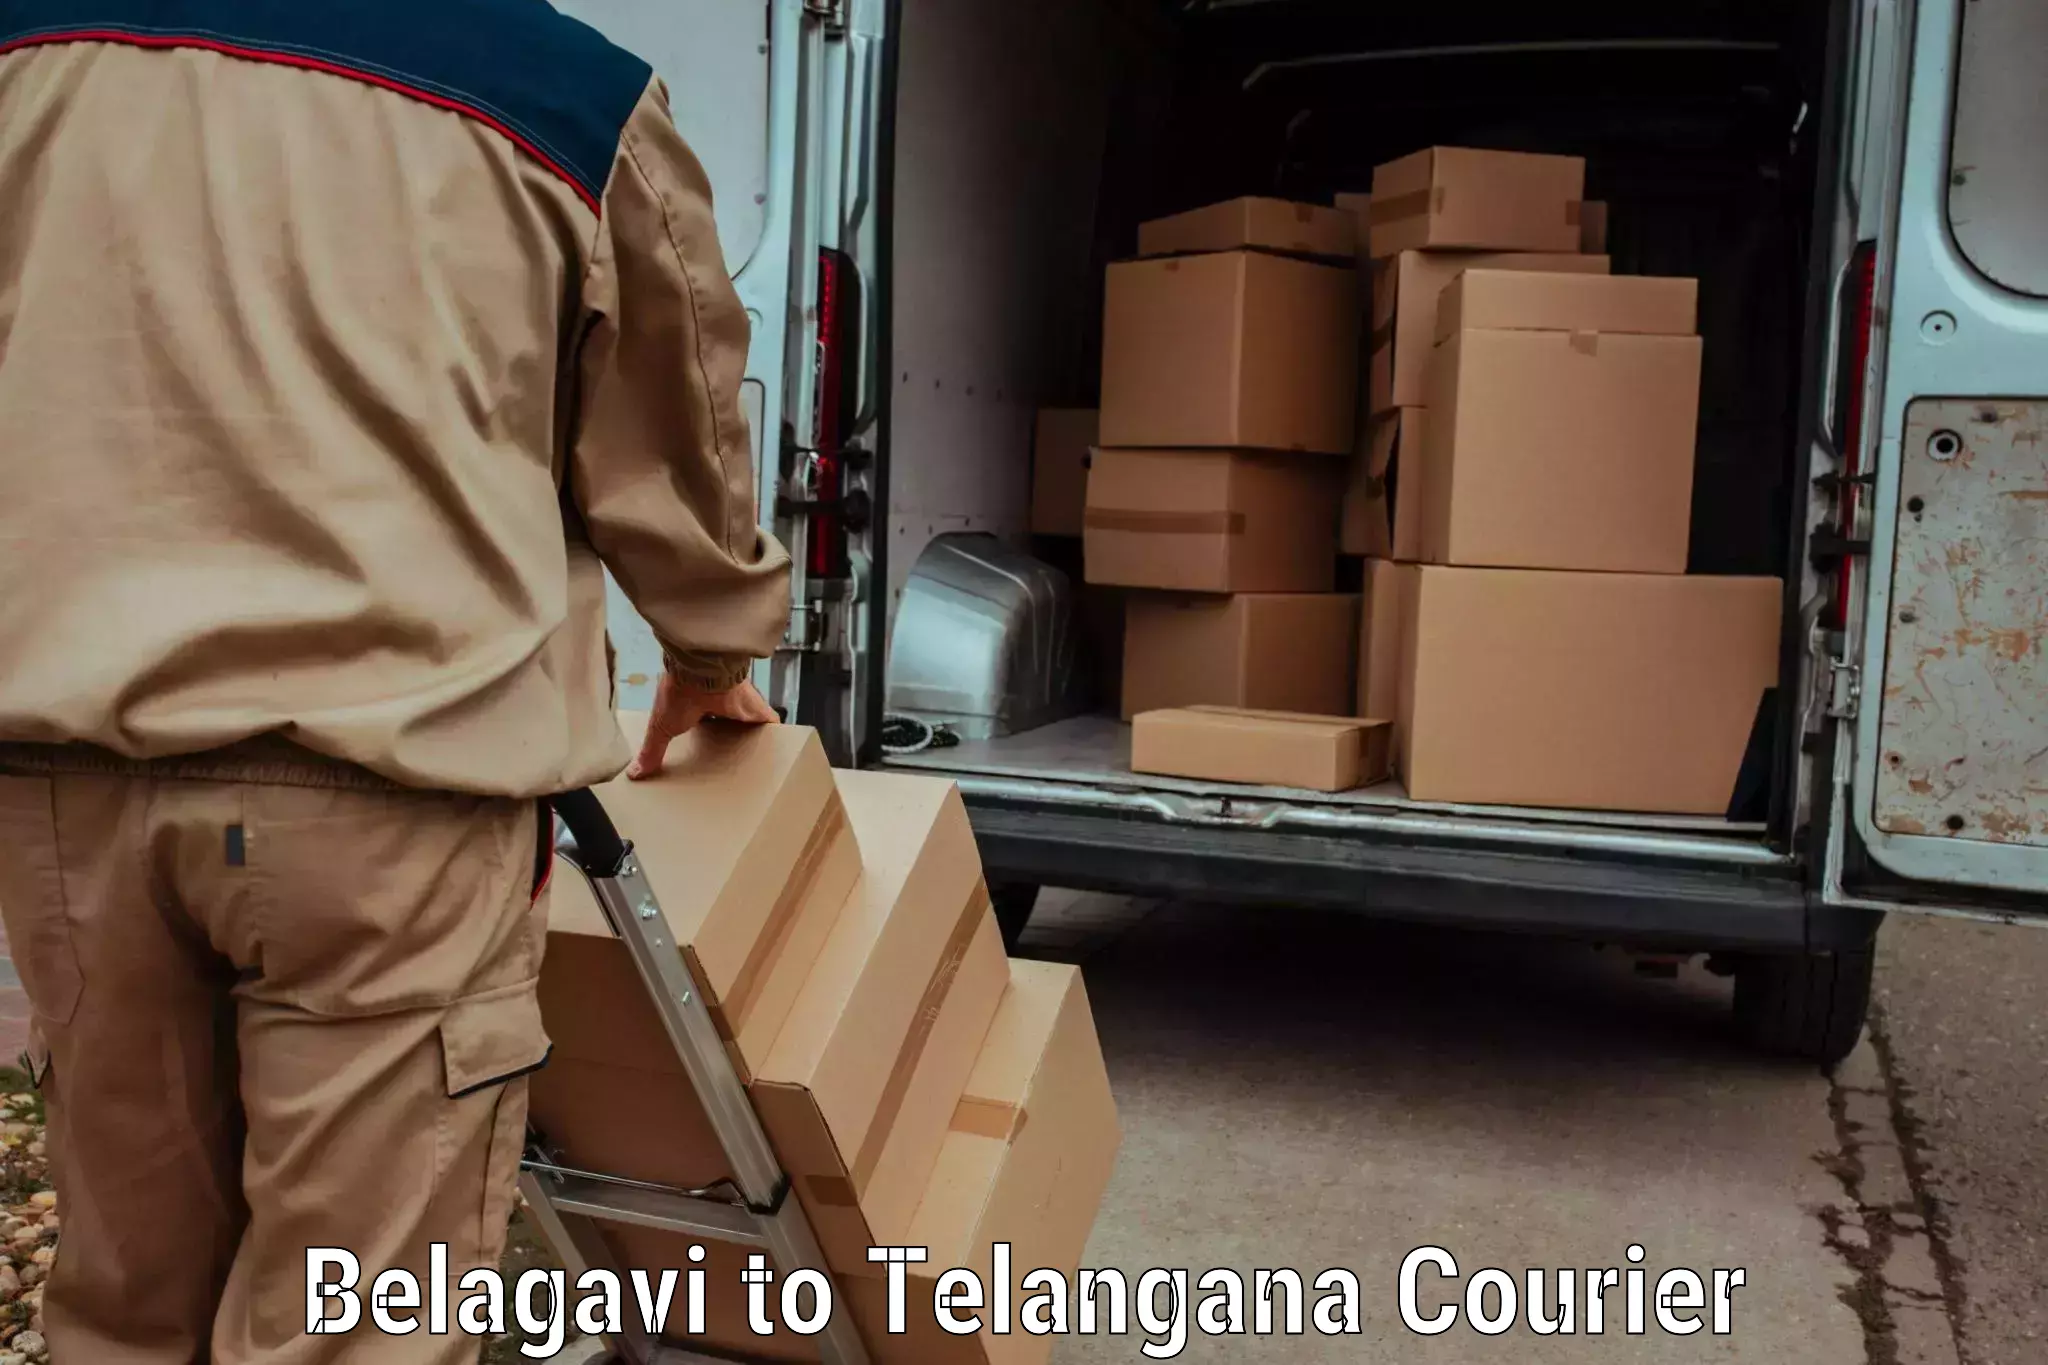 Subscription-based courier Belagavi to Yellandu